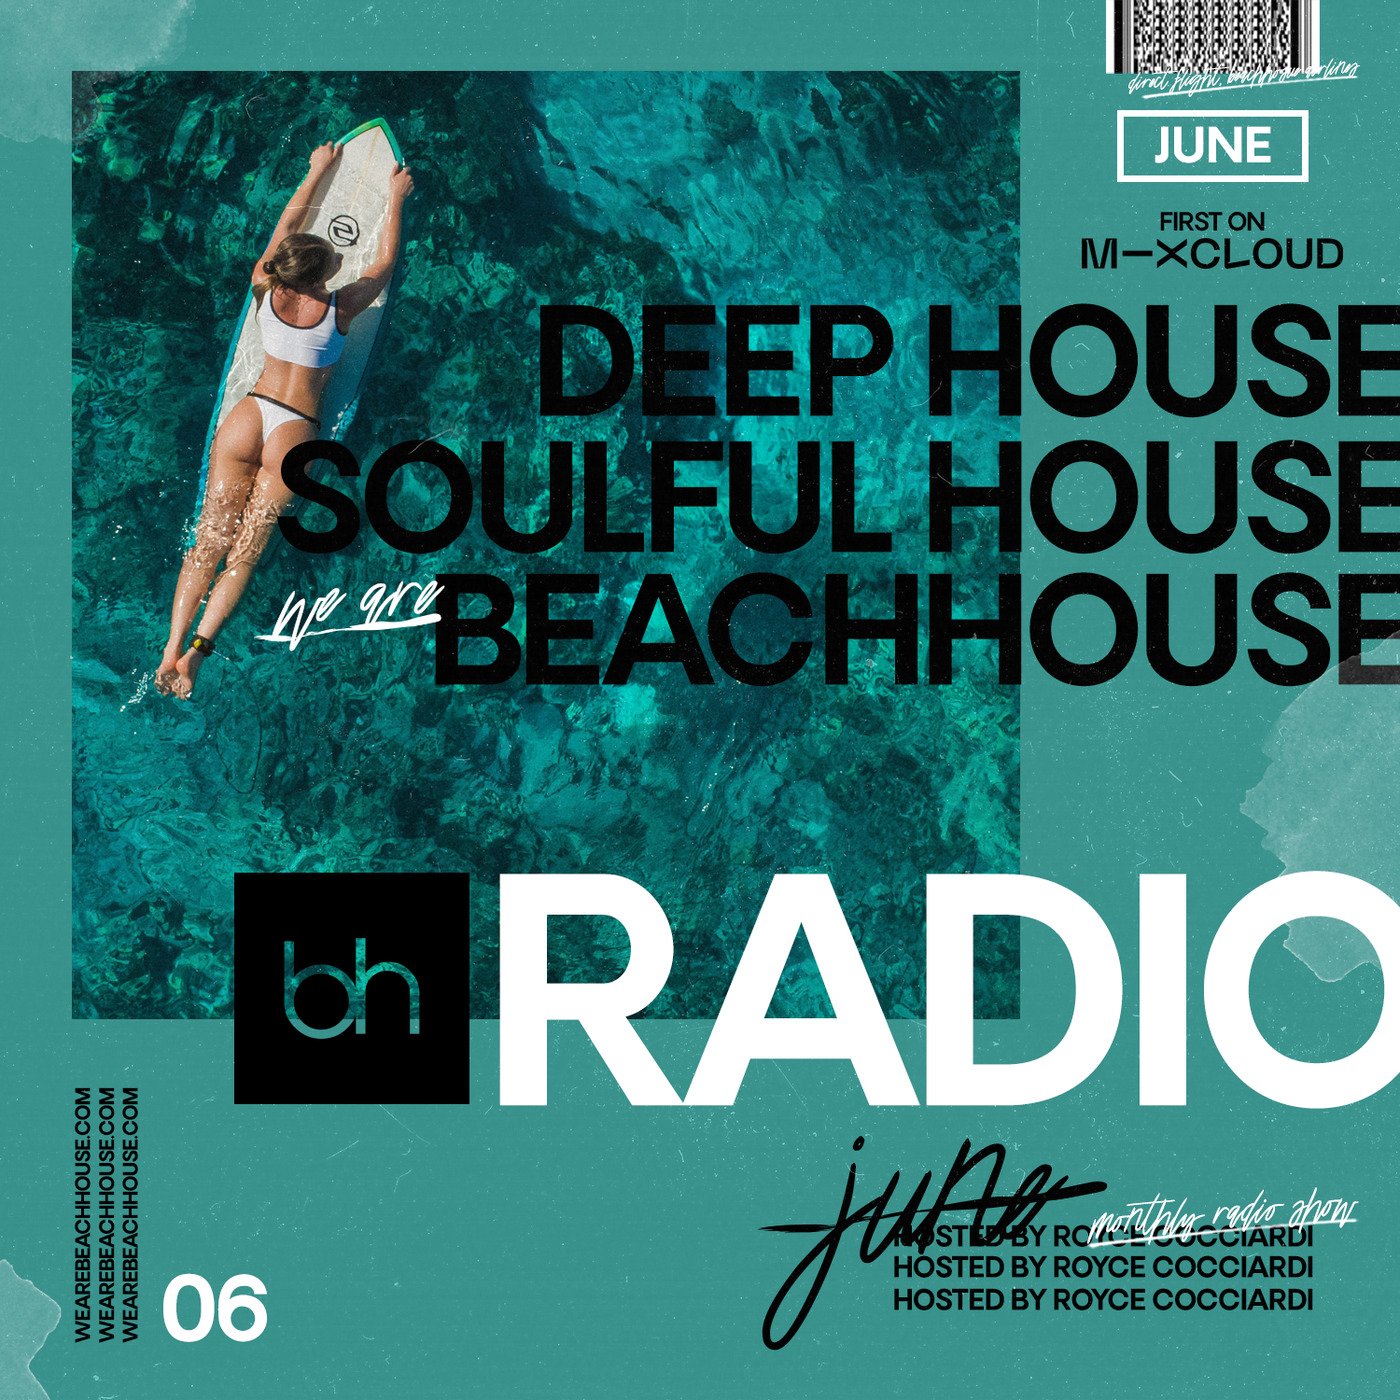 Beachhouse RADIO - June 2020 - Episode 06